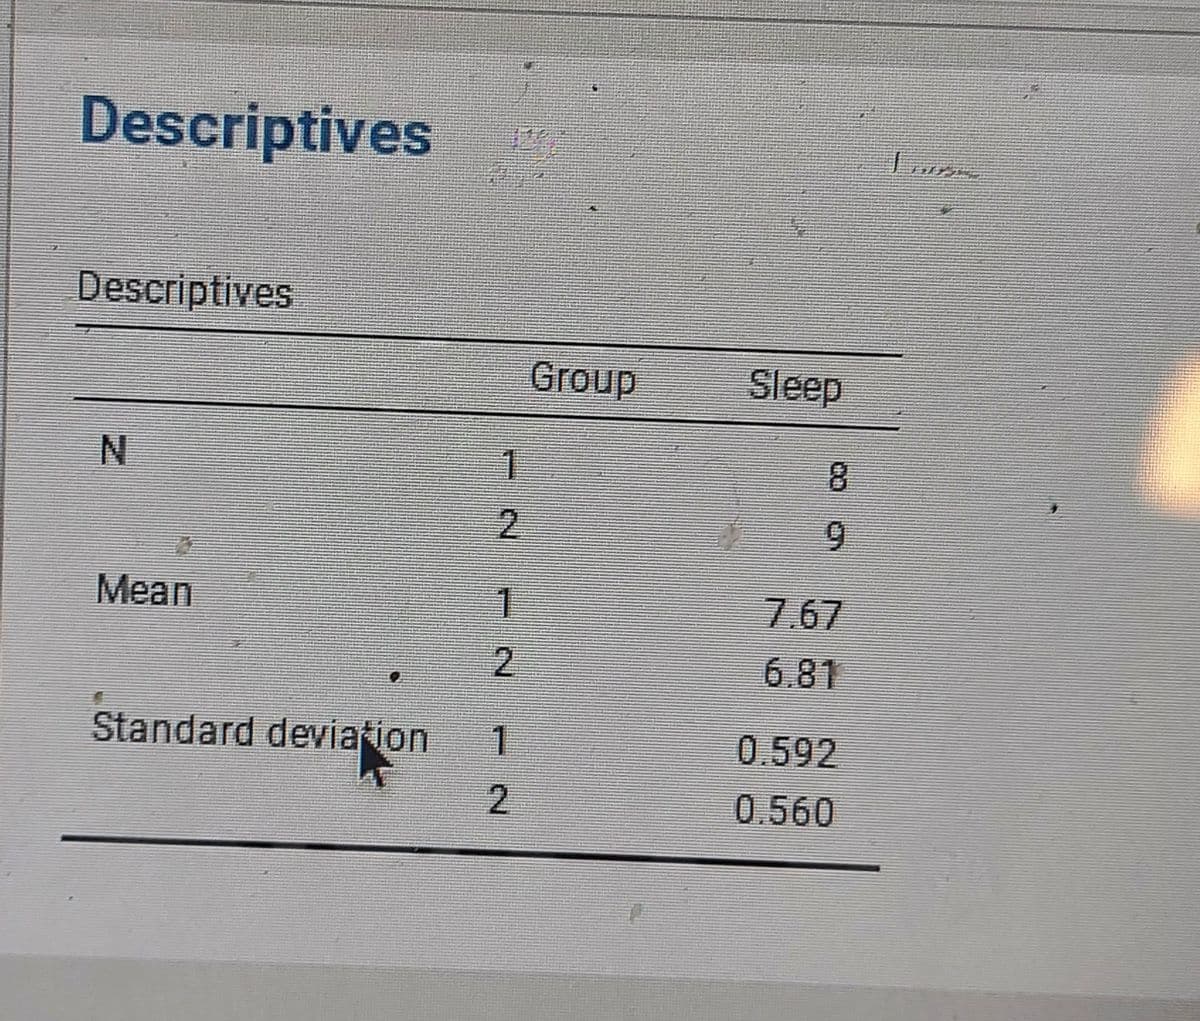 Descriptives
Descriptives
Group
Sleep
N.
1
8.
2.
6.
Mean
1
7.67
2
6.81
Standard deviation
1
0.592
2.
0.560
